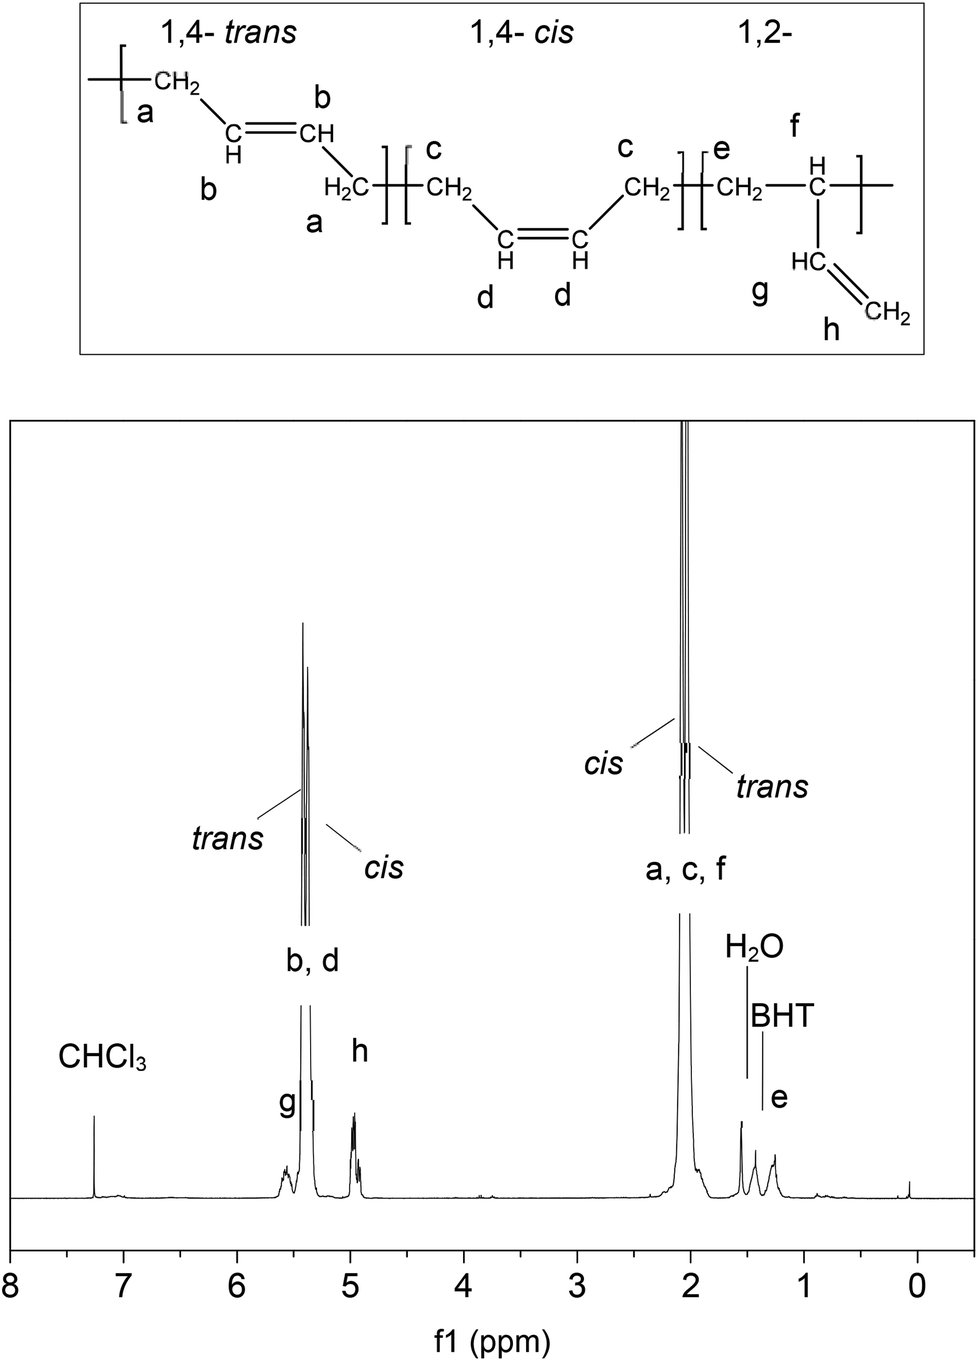 A facile route for rubber breakdown via cross metathesis reactions - Green  Chemistry (RSC Publishing) DOI:10.1039/C5GC03075G